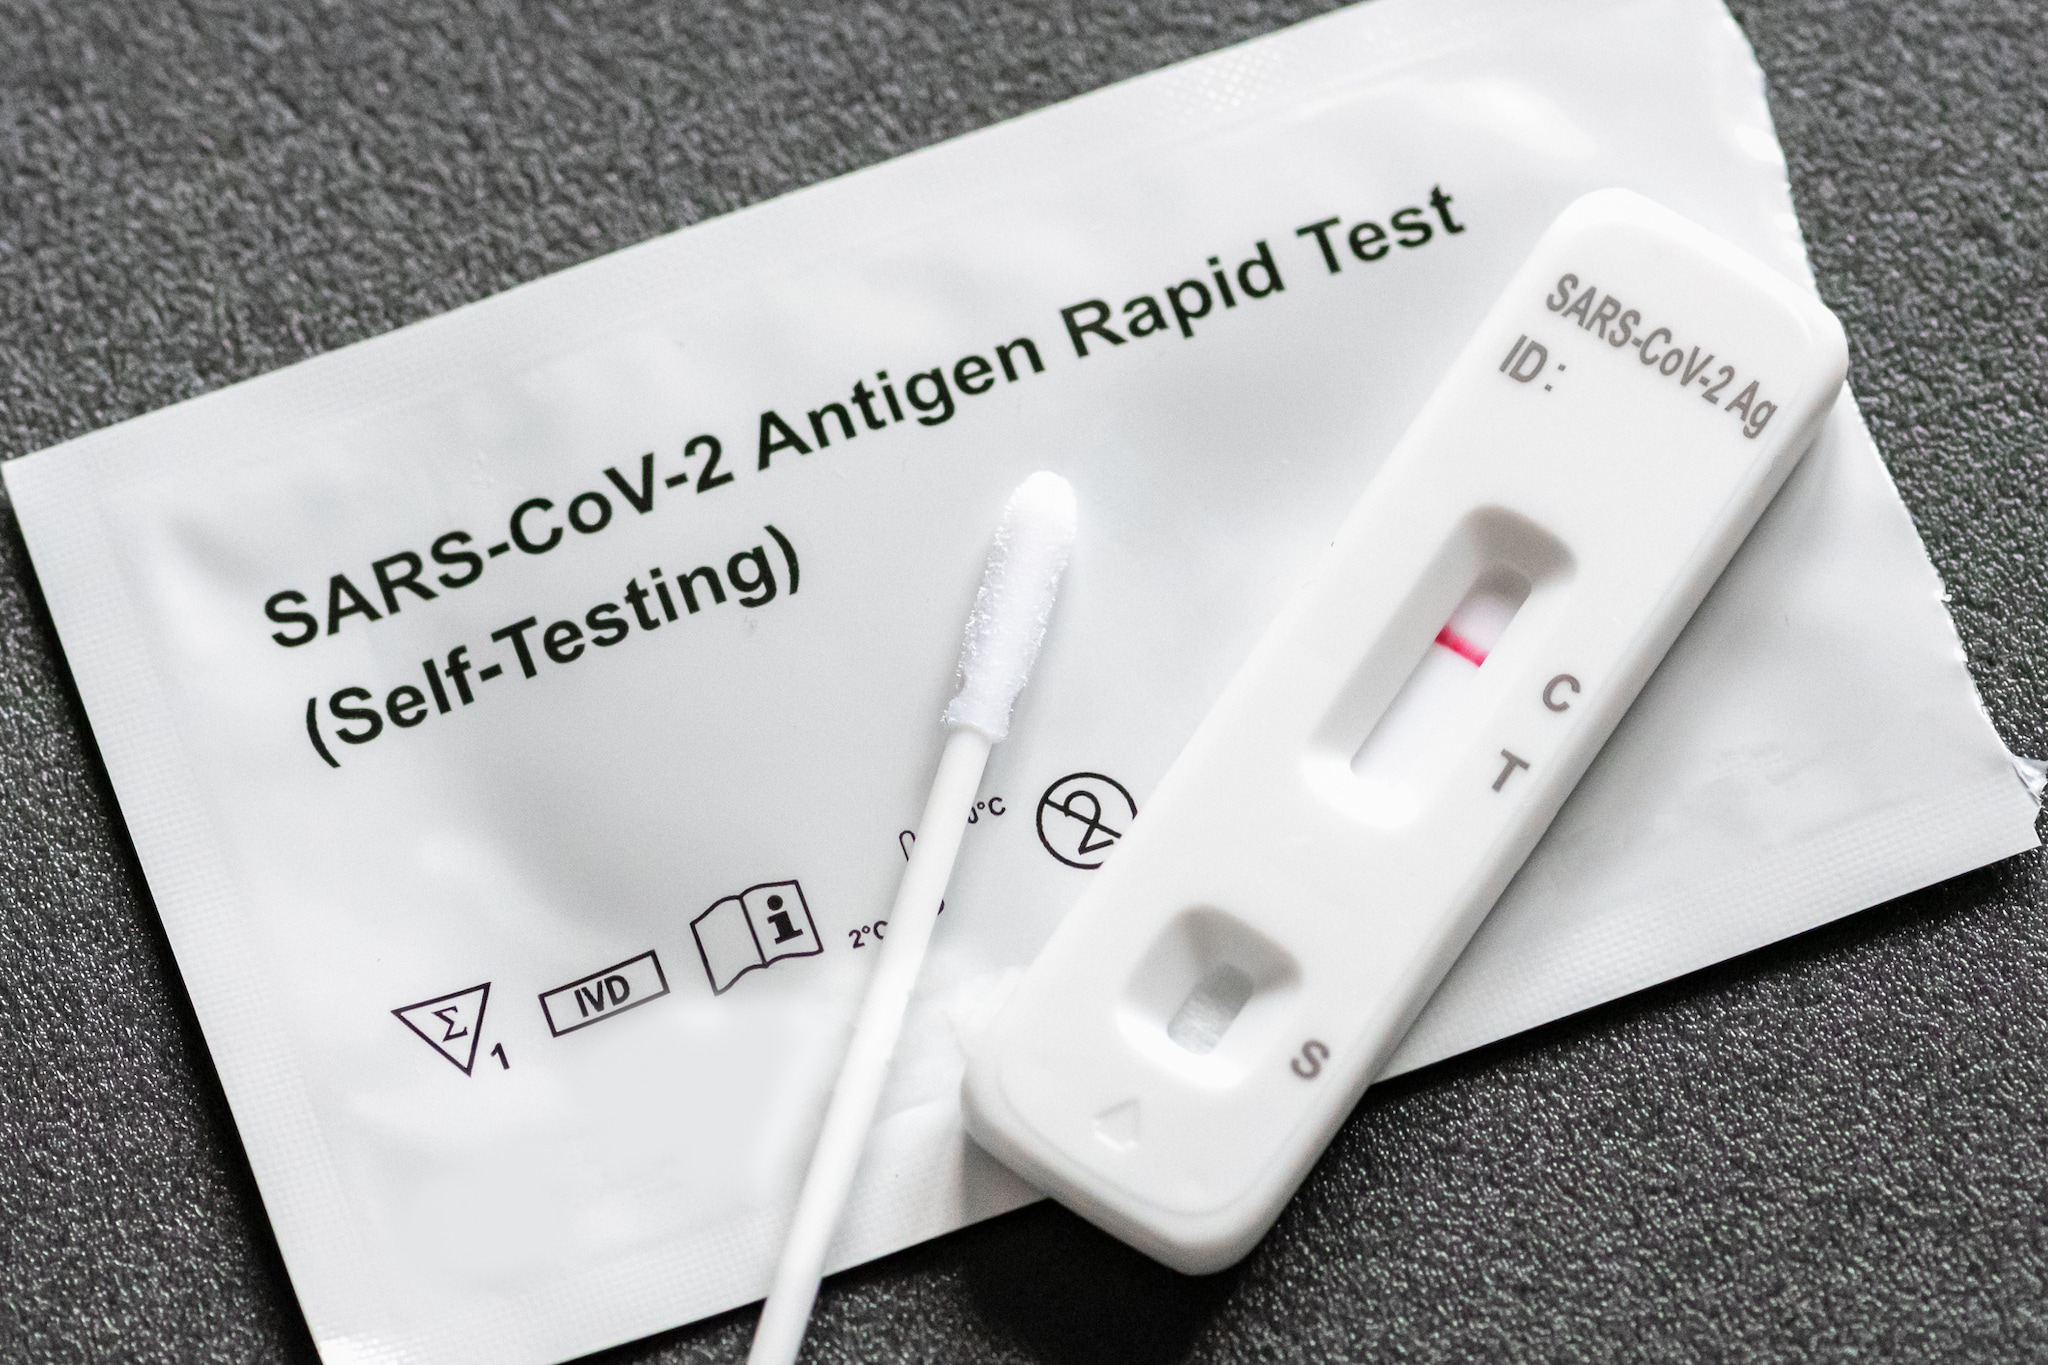 https://www.cdc.gov/coronavirus/2019-ncov/images/testing/COVID-19-rapid-test.jpg?_=12984